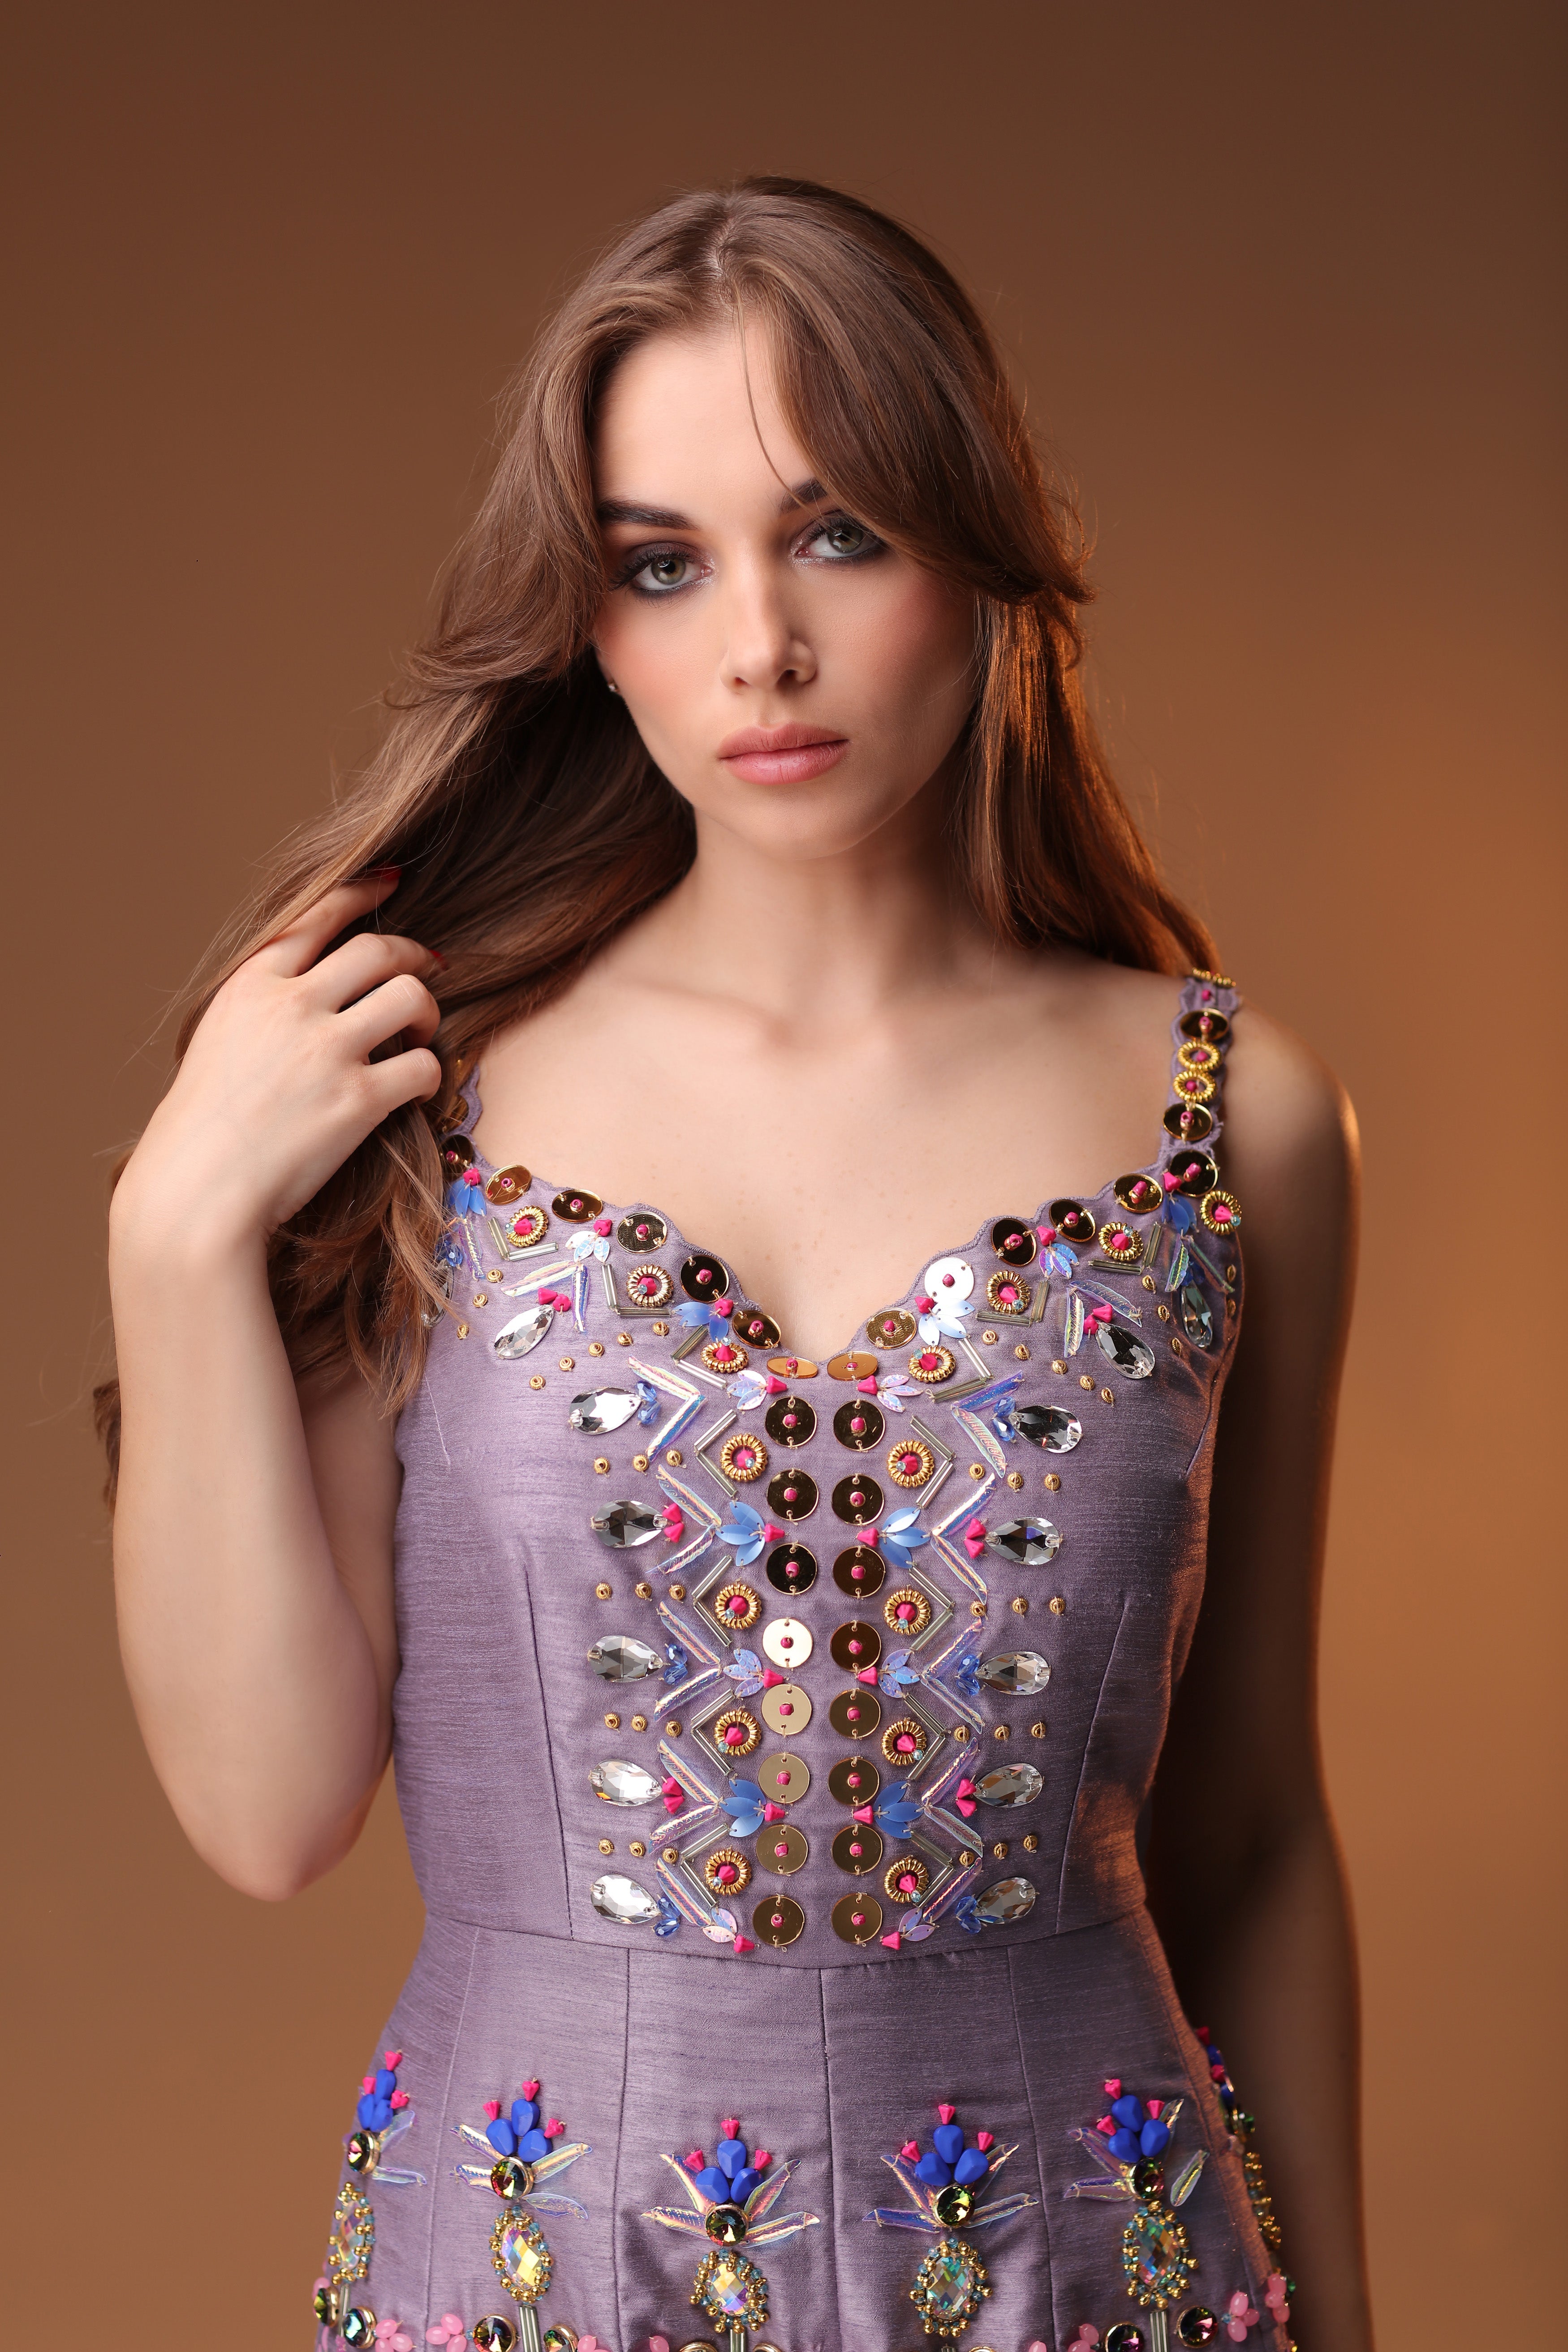 Romantic Lavender Maxi Dress